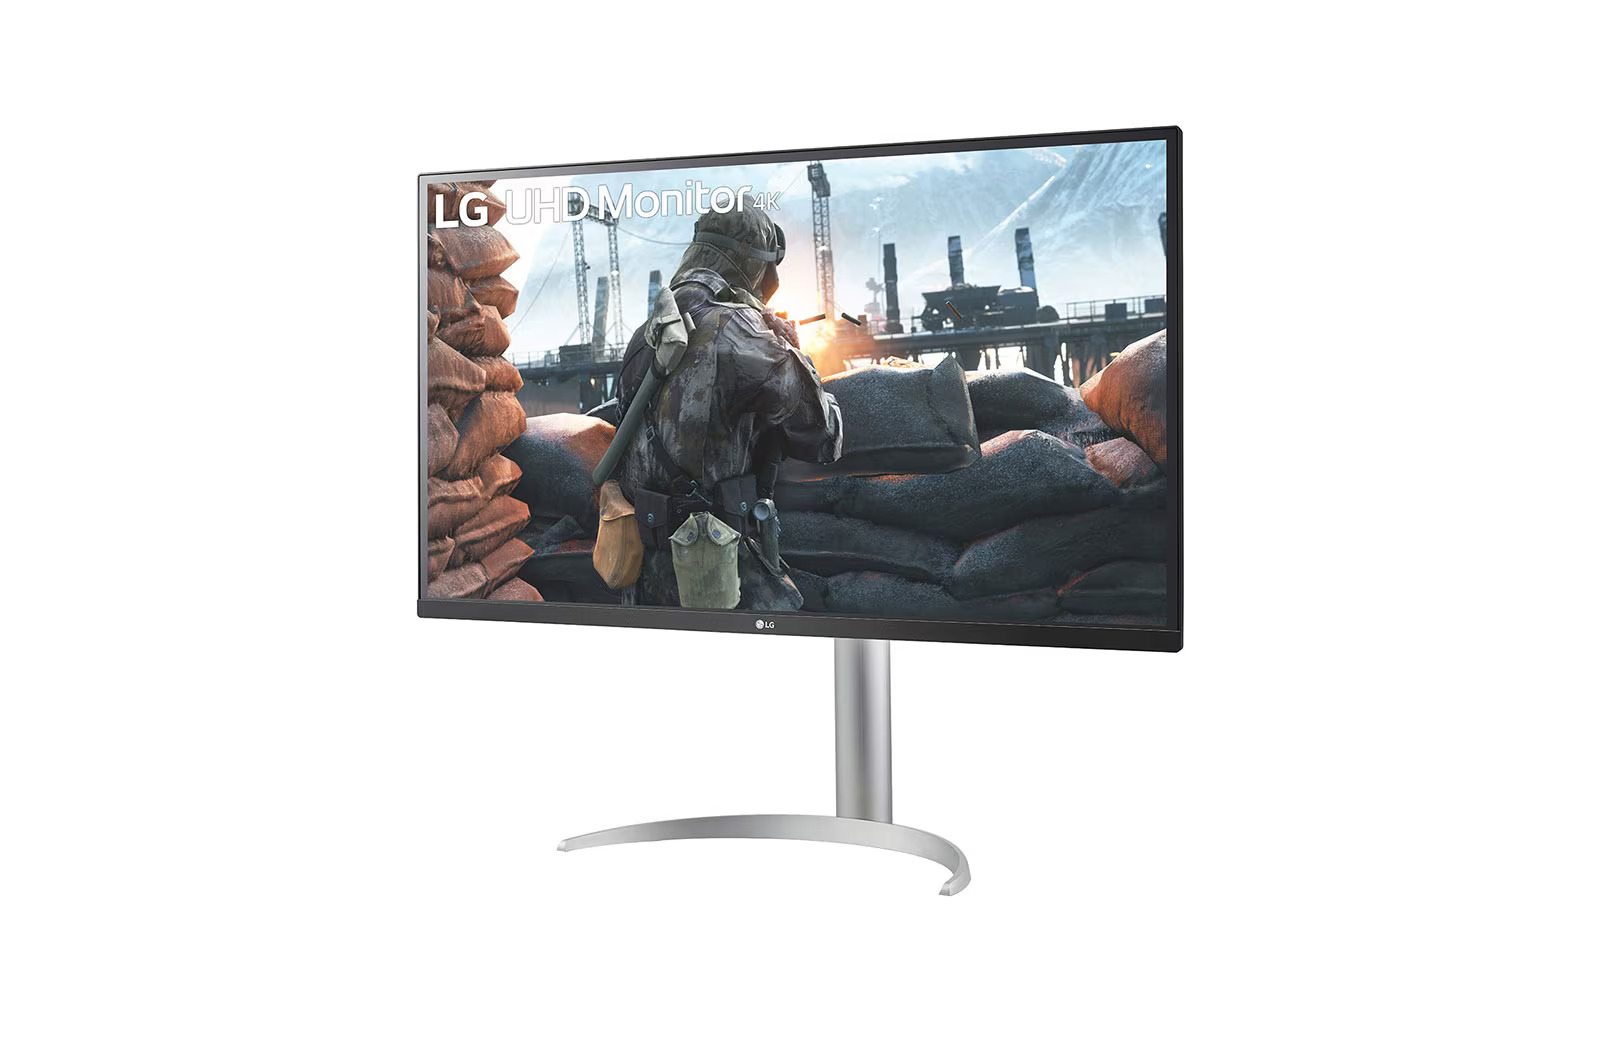 LG monitor 32" 4k UHD - 32UP550-W